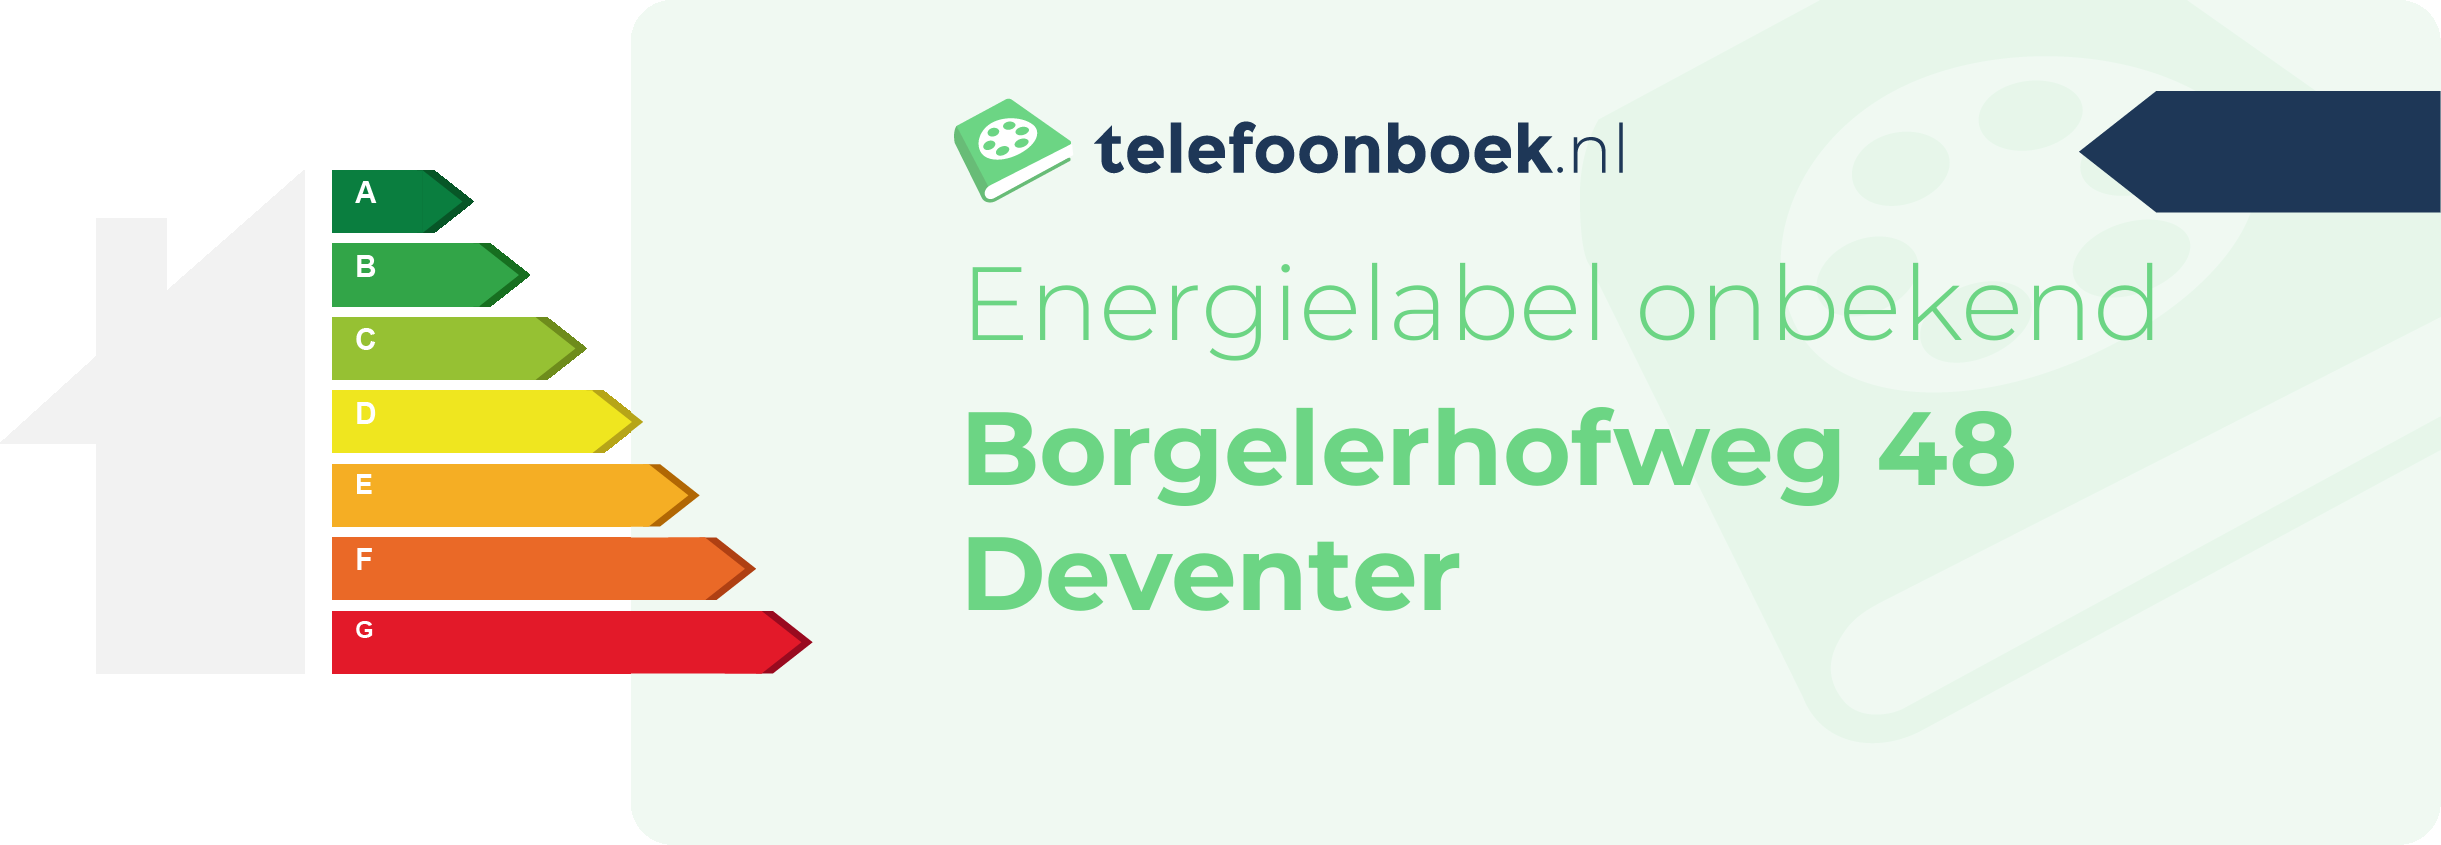 Energielabel Borgelerhofweg 48 Deventer